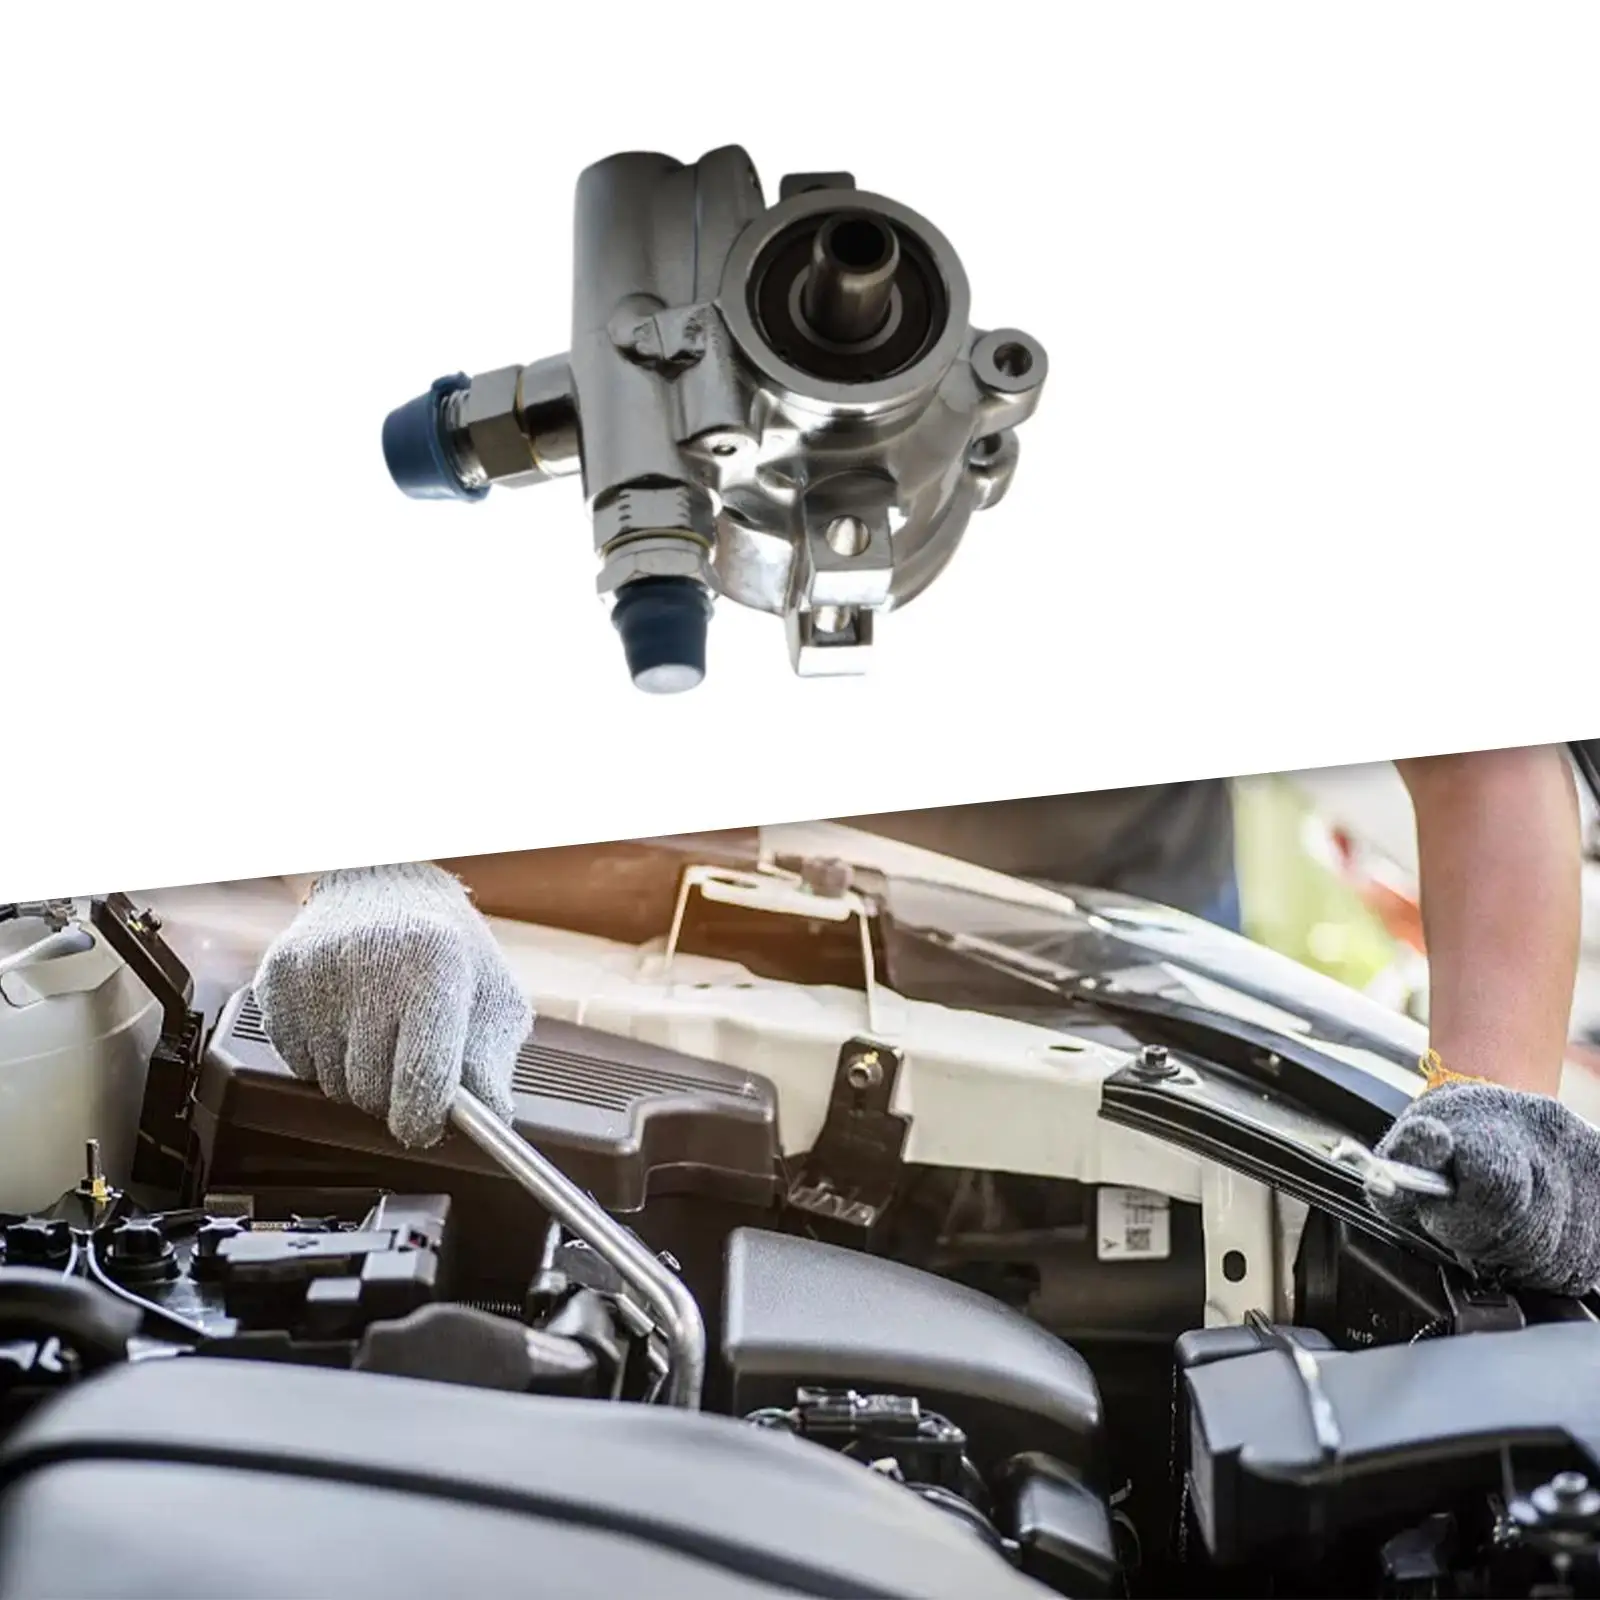 Power Steering Pump, Power Assist Pump, Professional High Performance Sturdy Repair Part